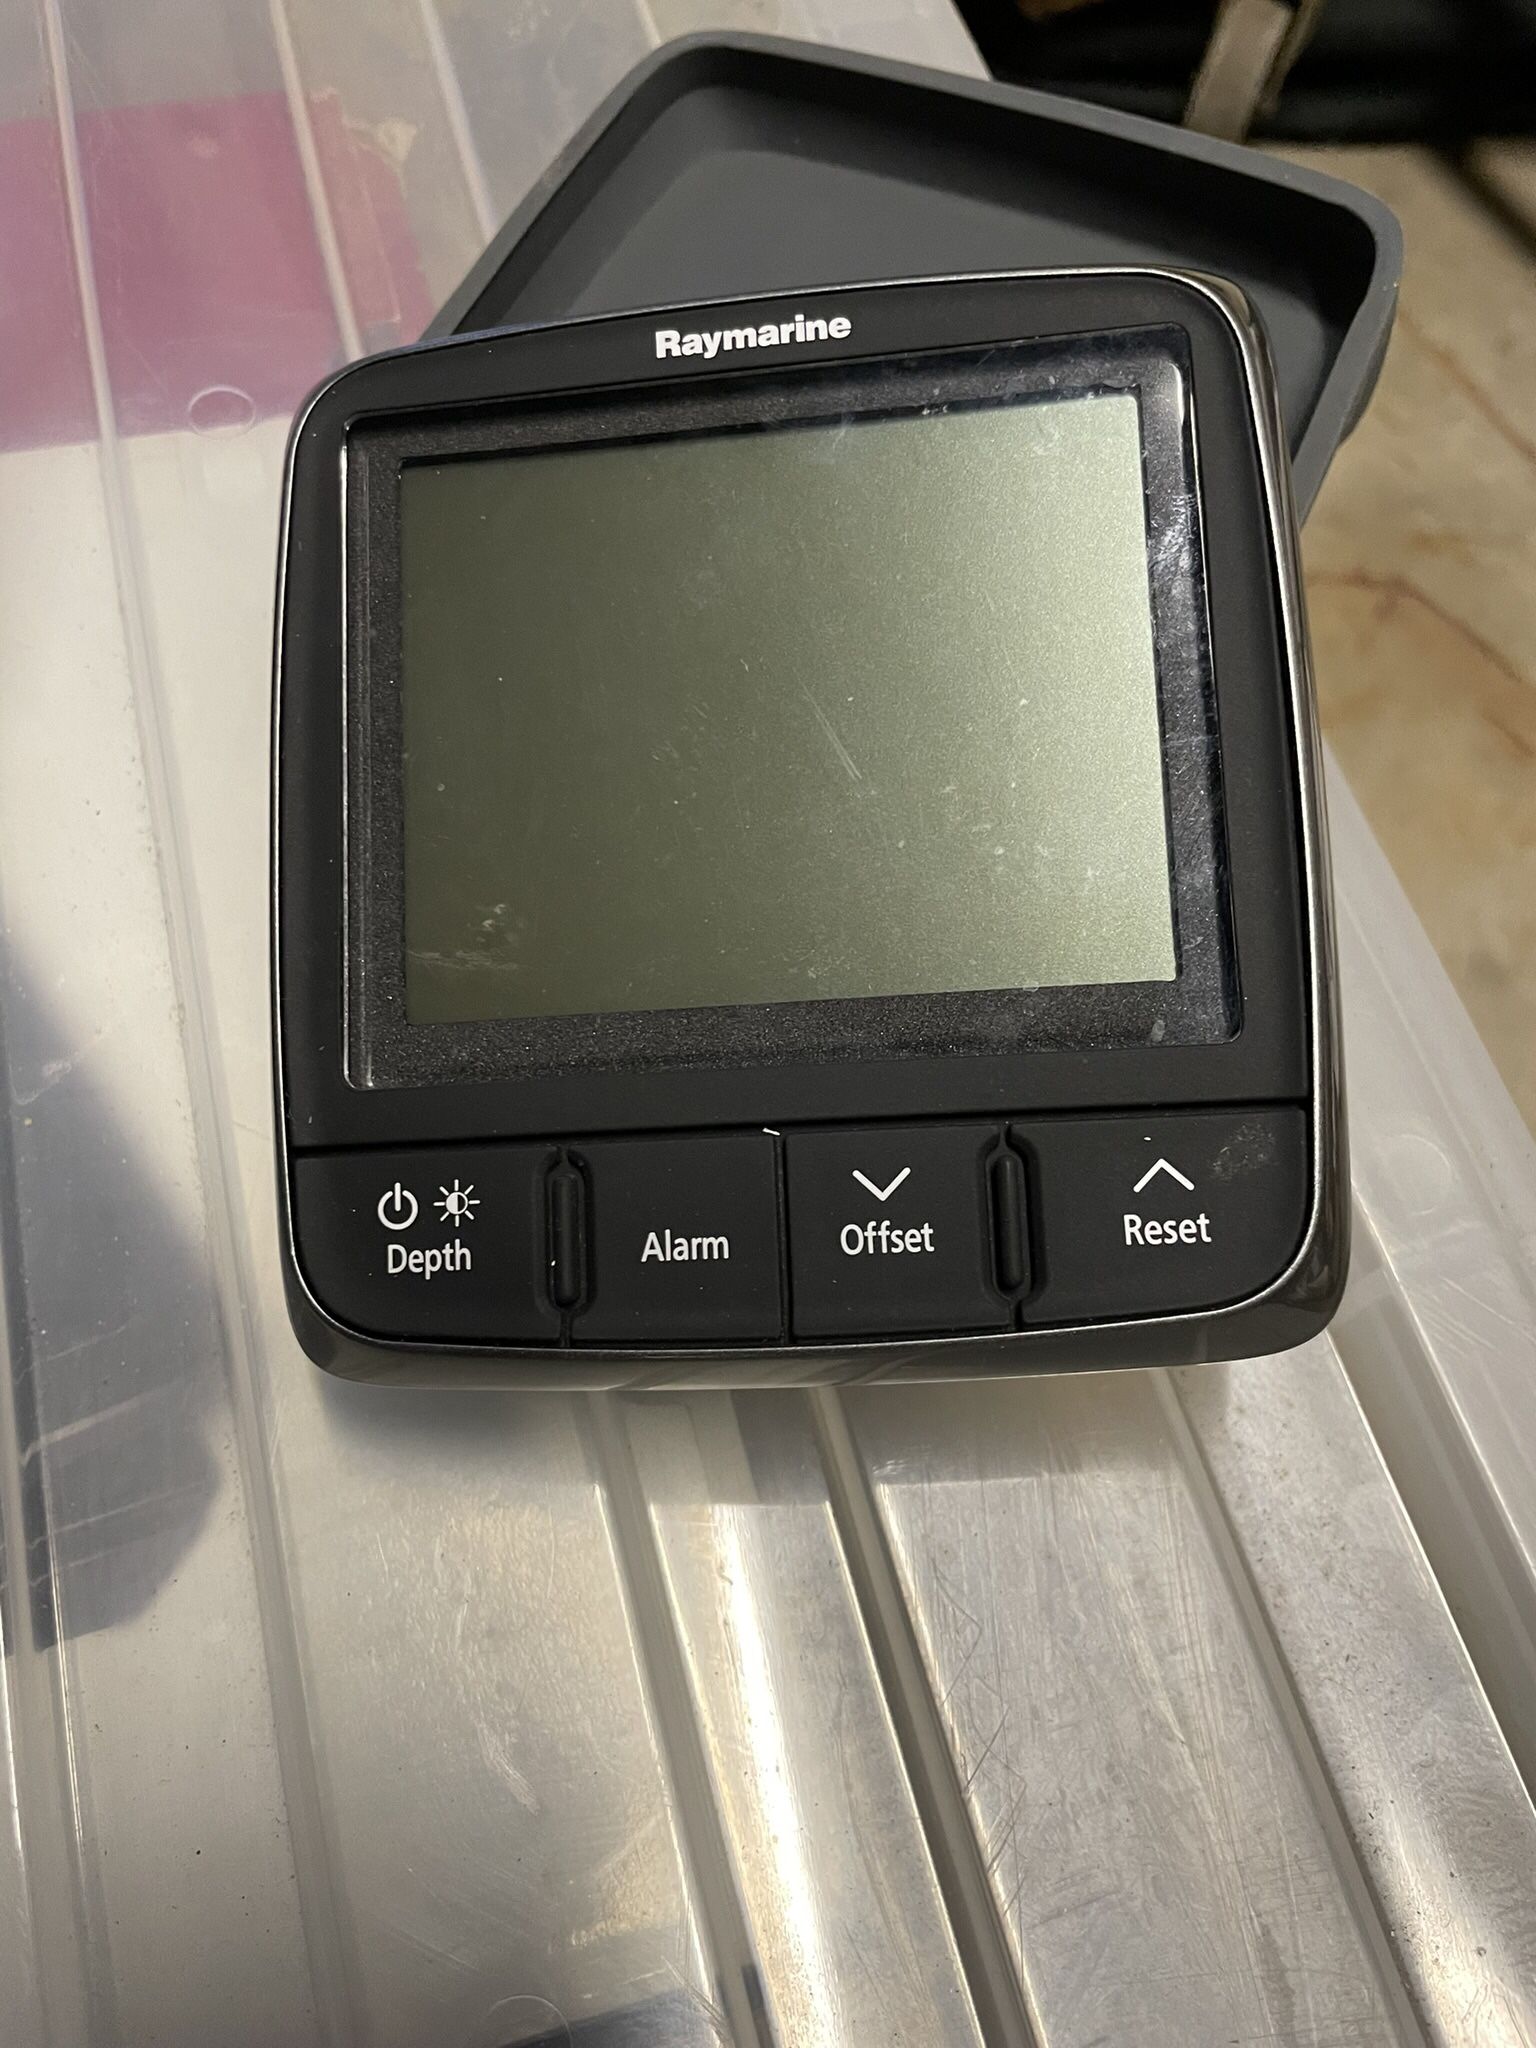 Raymarine speed depth temp transducer and i50 display